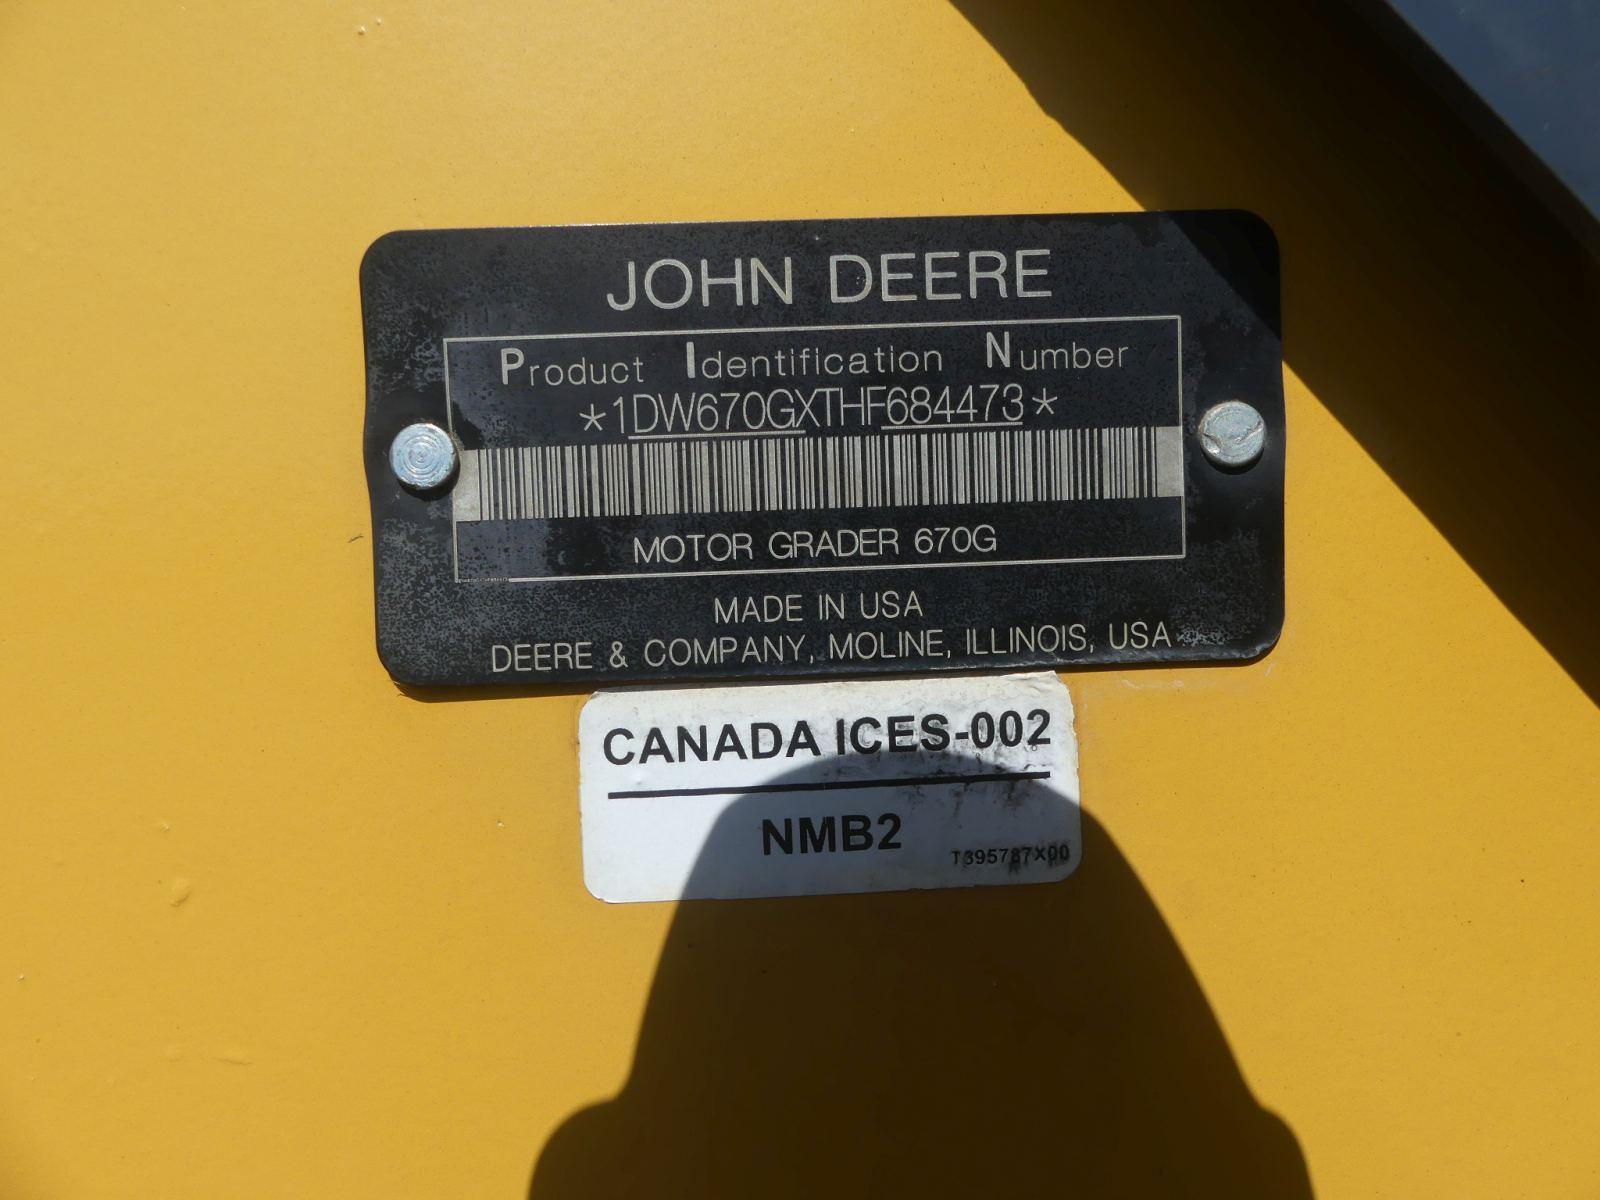 2017 John Deere 670G Motor Grader, s/n 1DW670GXTHF684473: Encl. Cab, 14' Mo